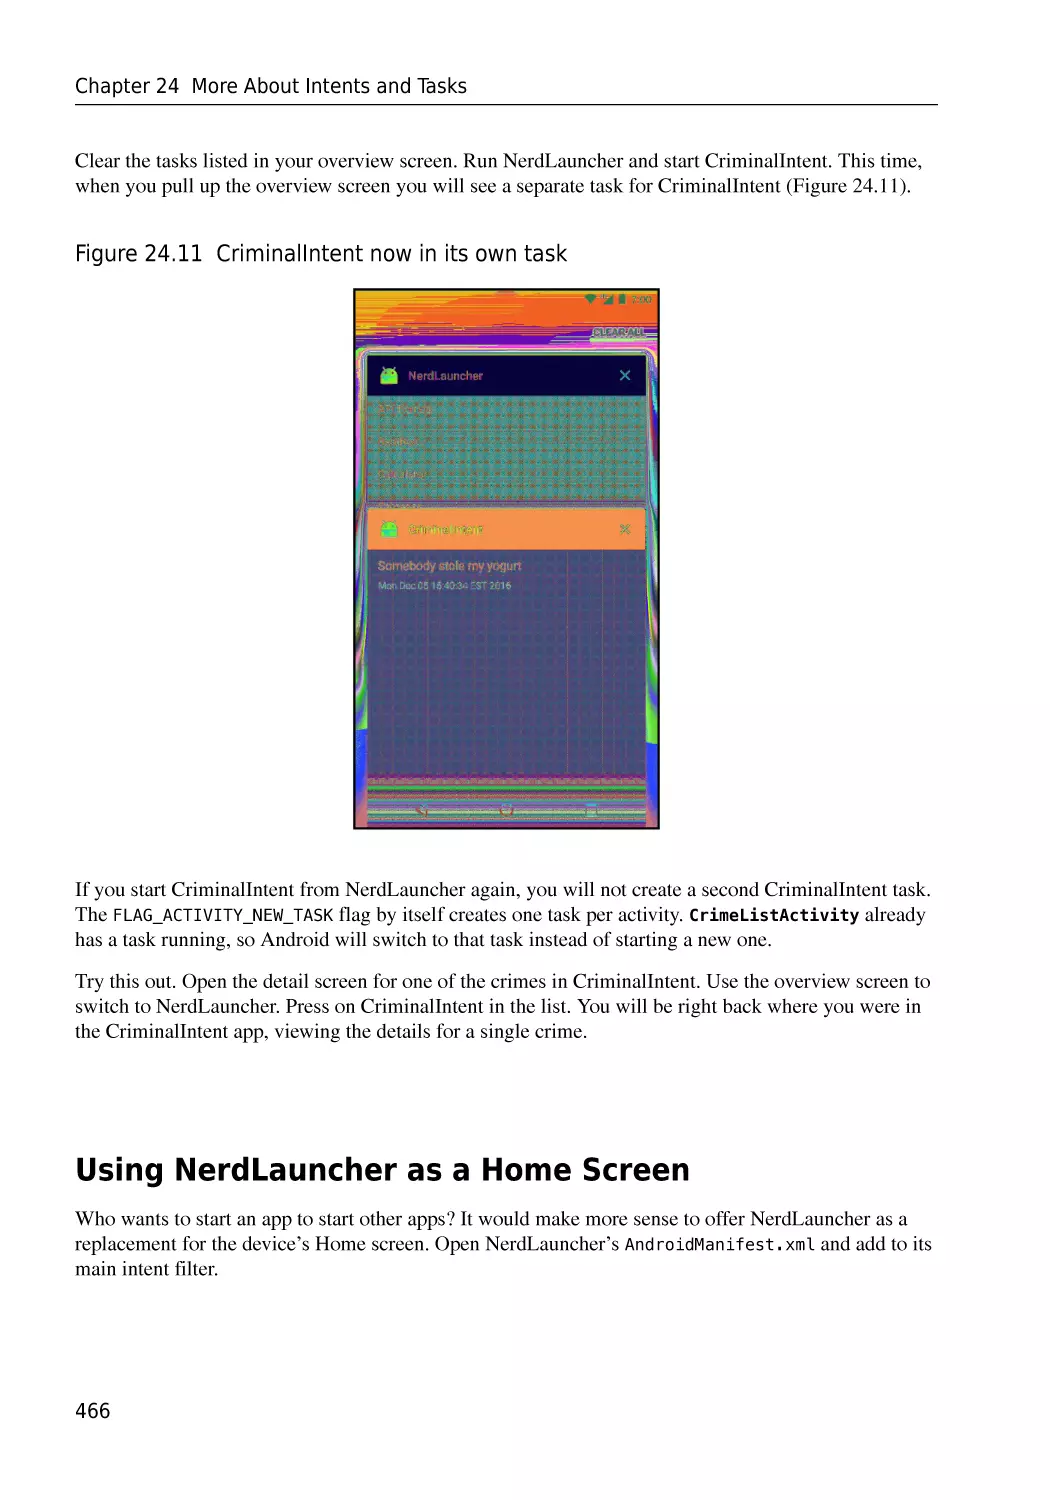 Using NerdLauncher as a Home Screen